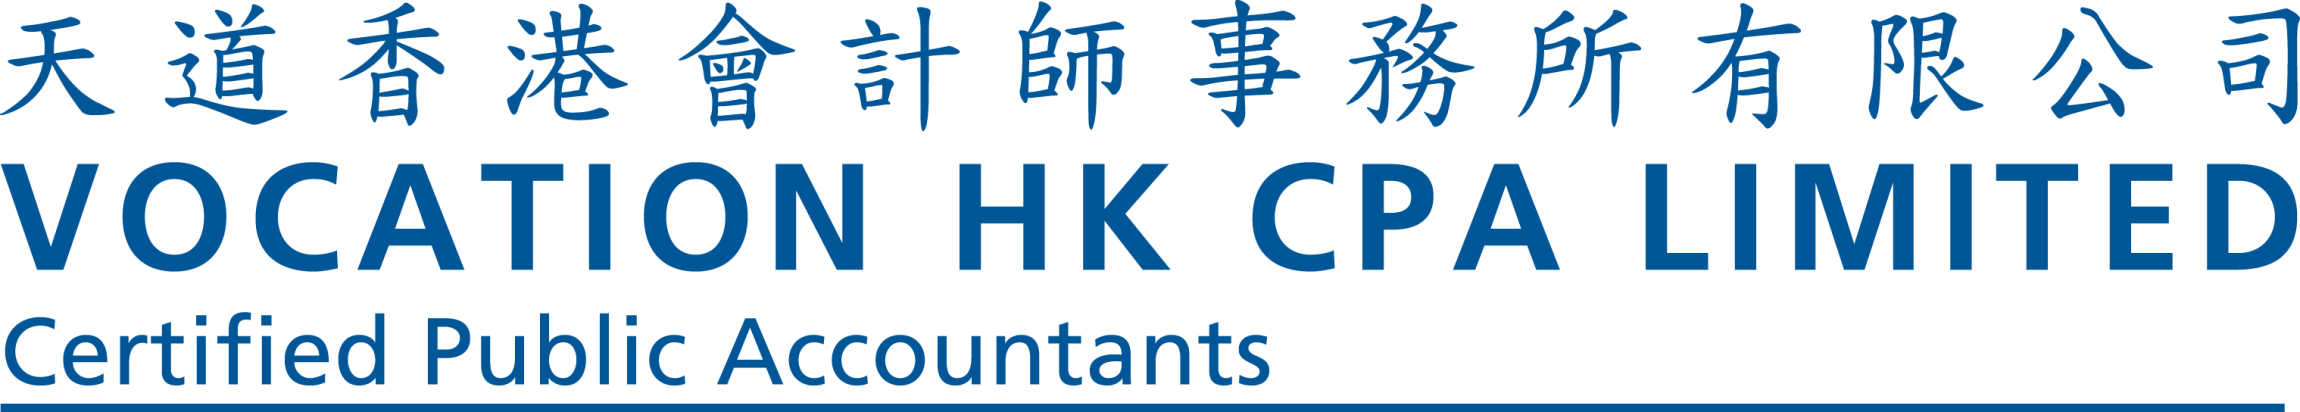 Self Photos / Files - Vocation logo_HKICPA